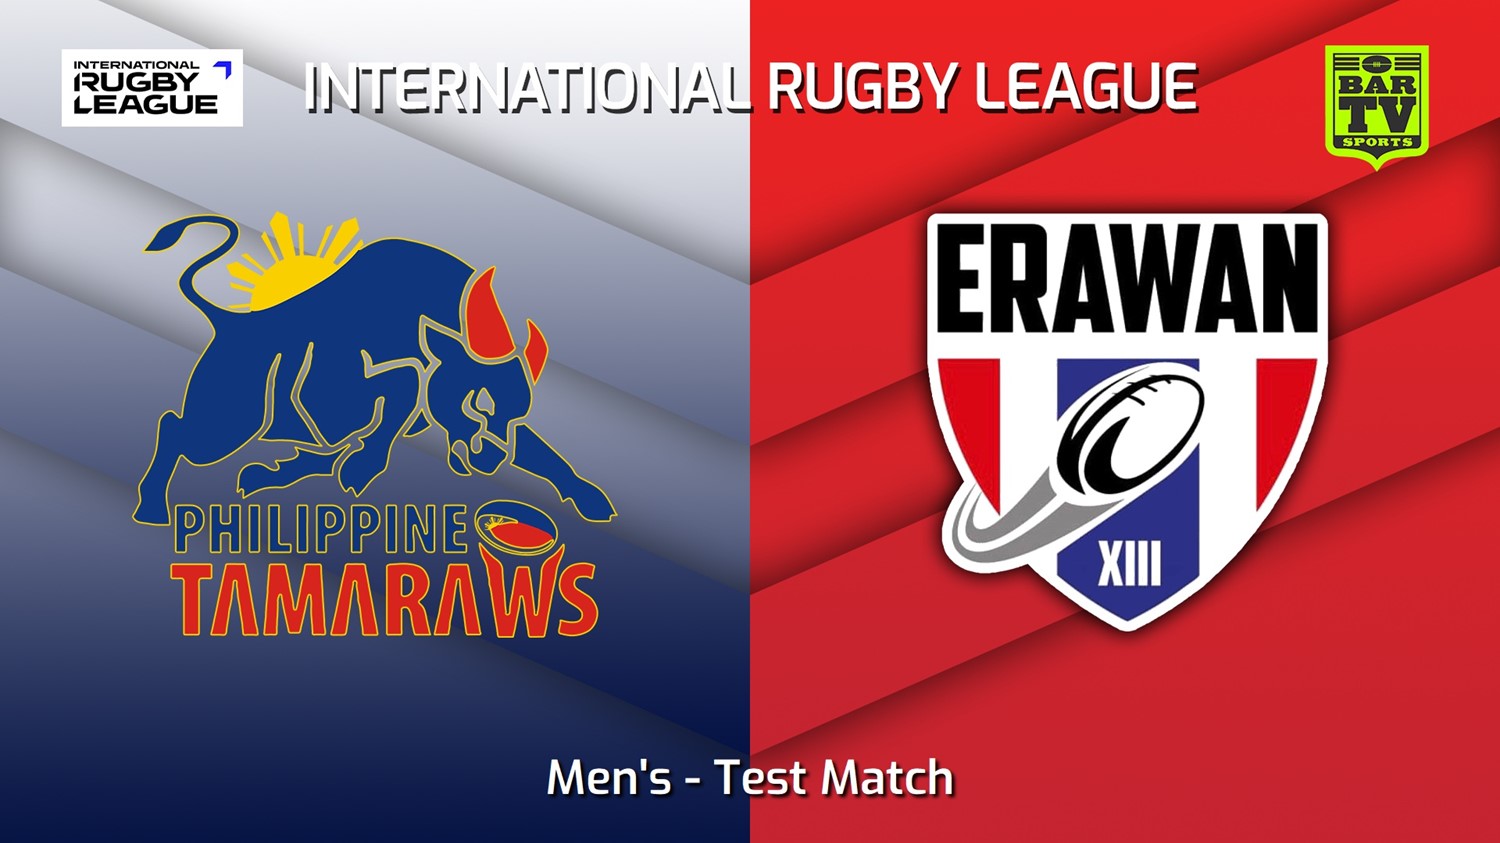 221009-International RL Test Match - Men's - Philippines Tamaraws v Thailand Erawan Minigame Slate Image